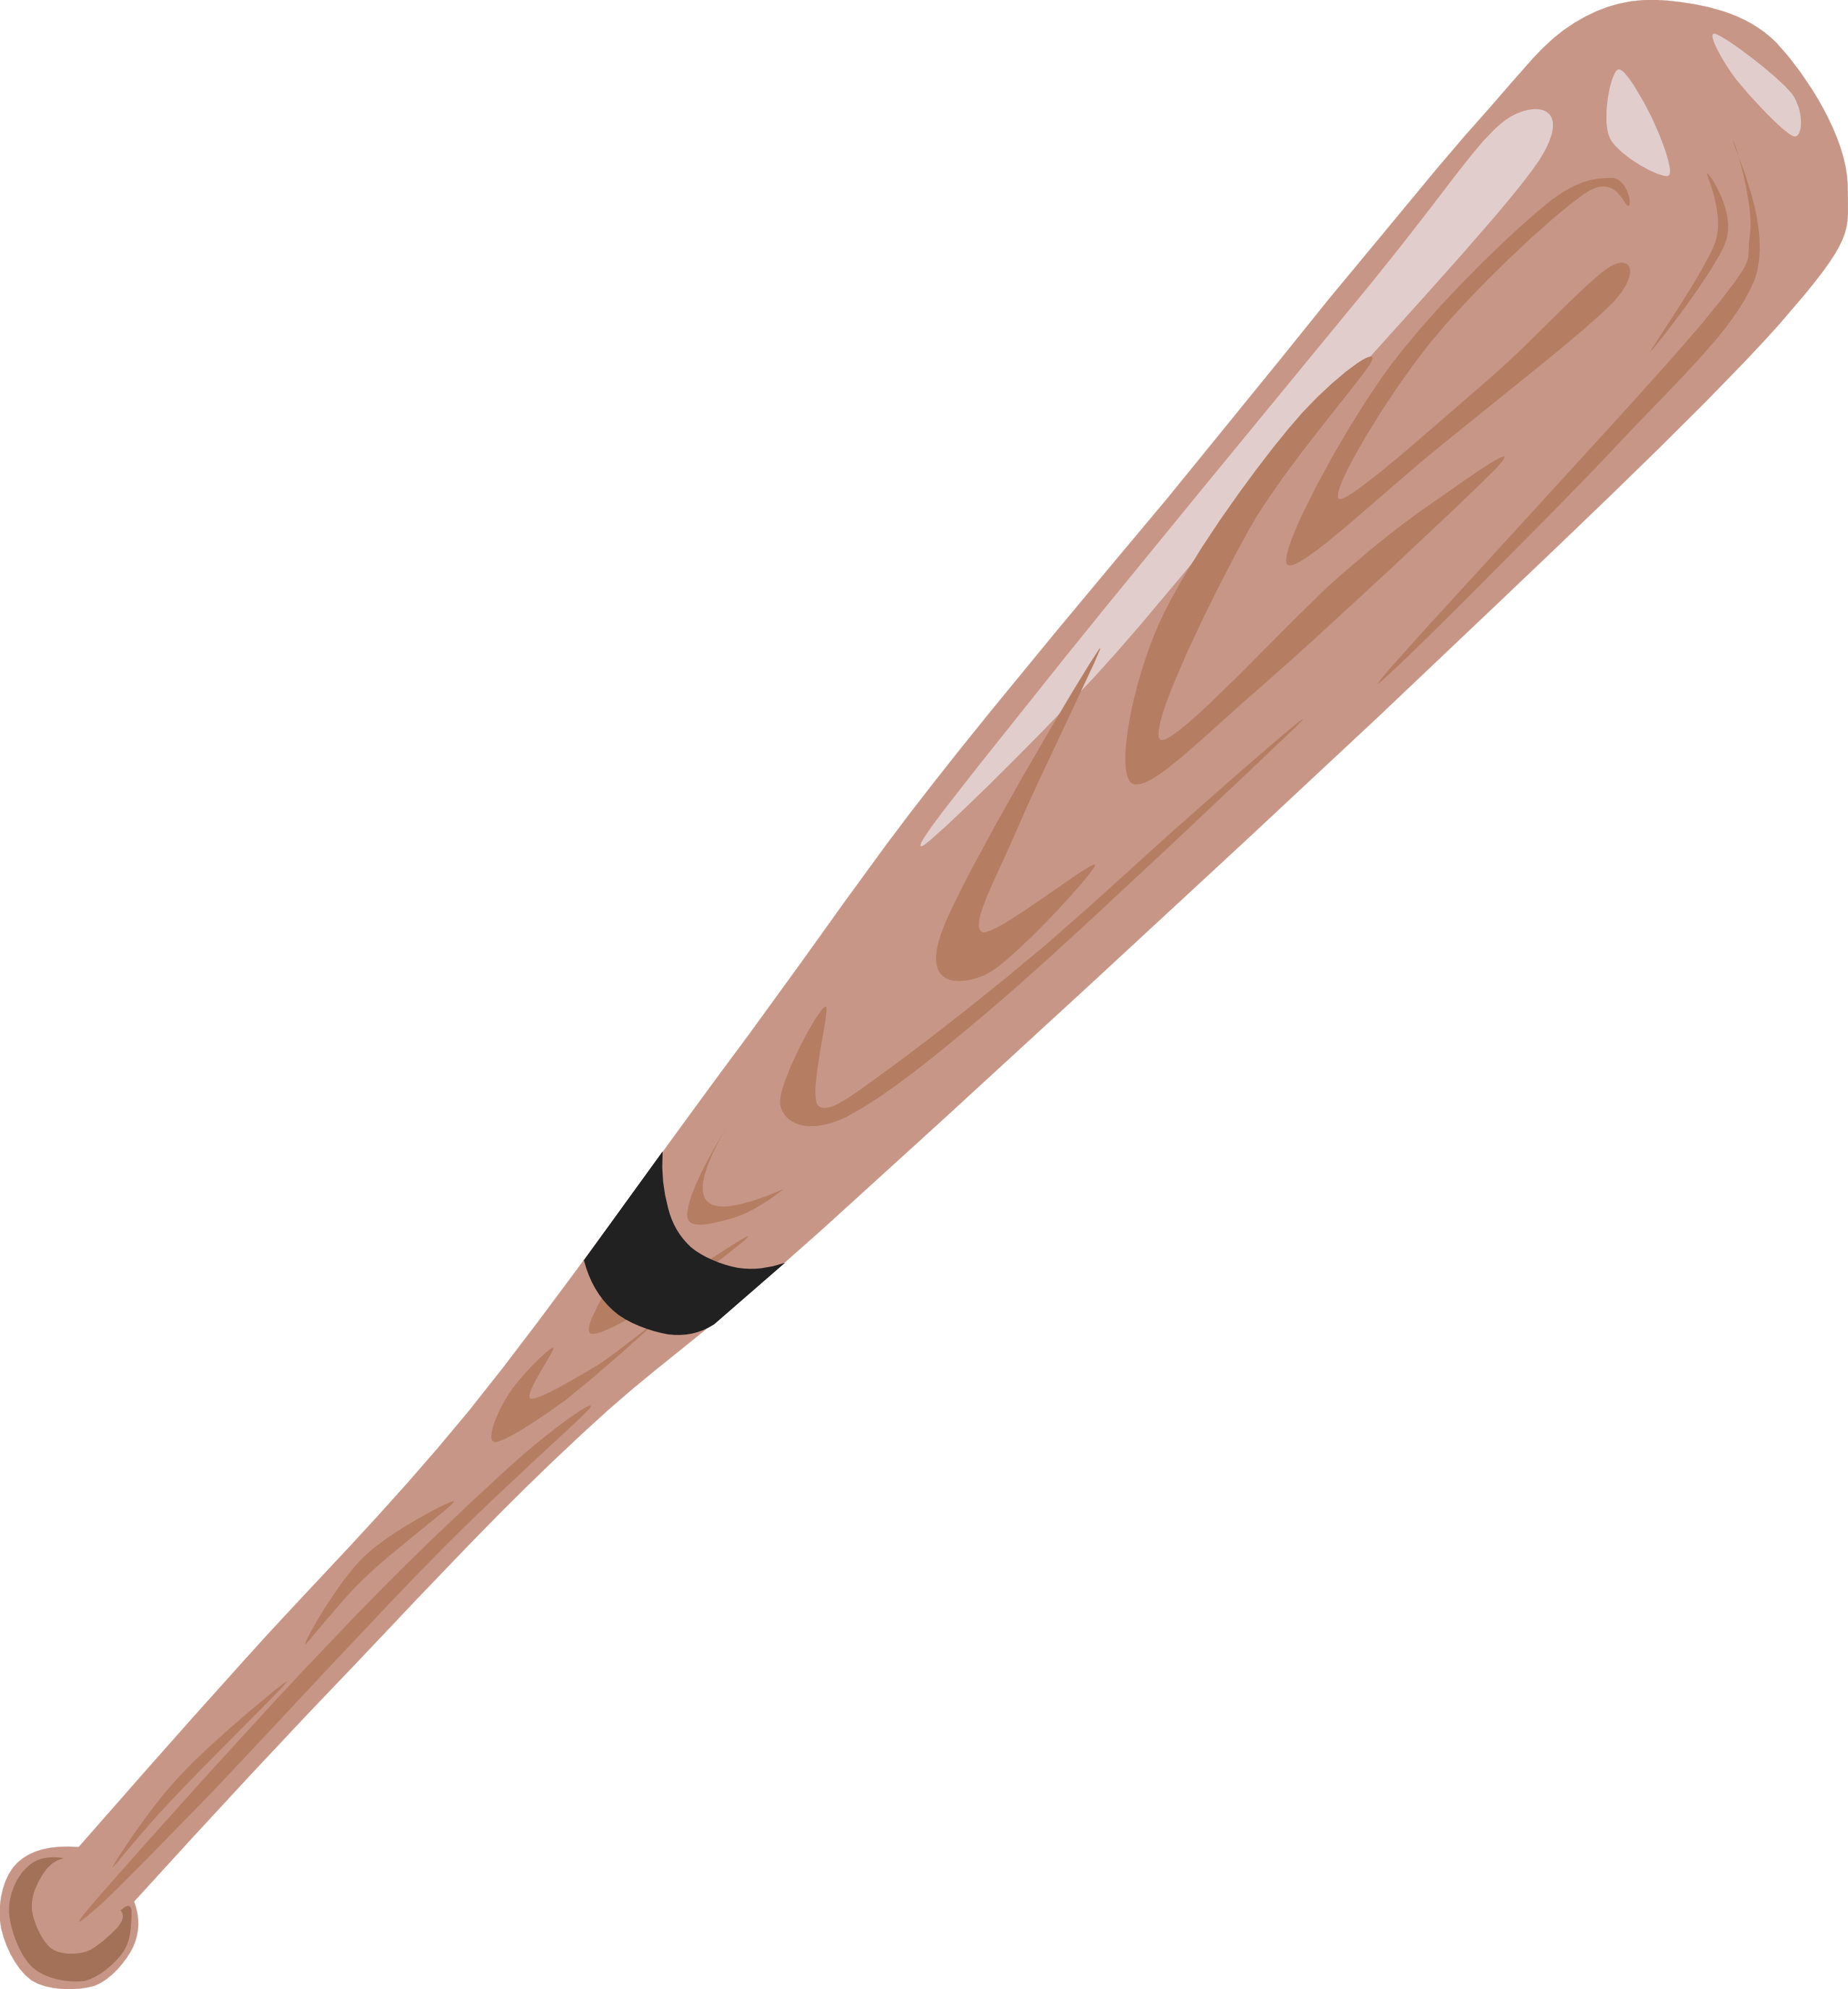 Free baseball bat clipart